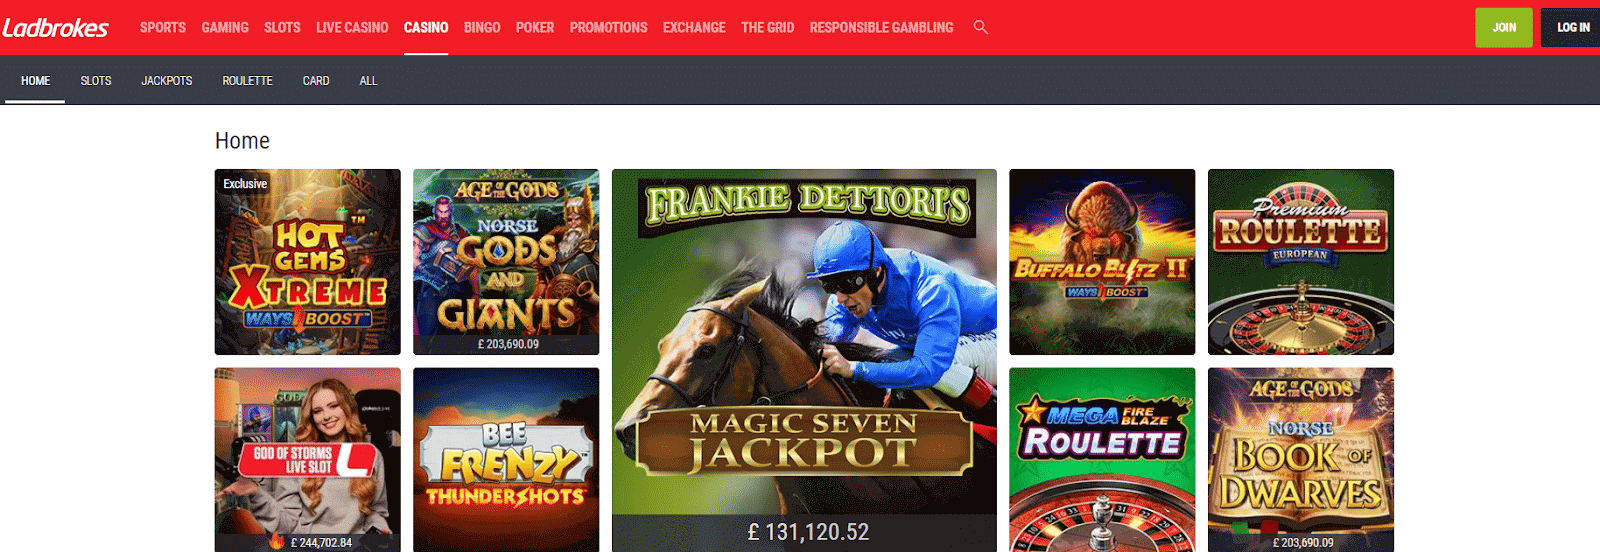 Ladbrokes Online Casino review